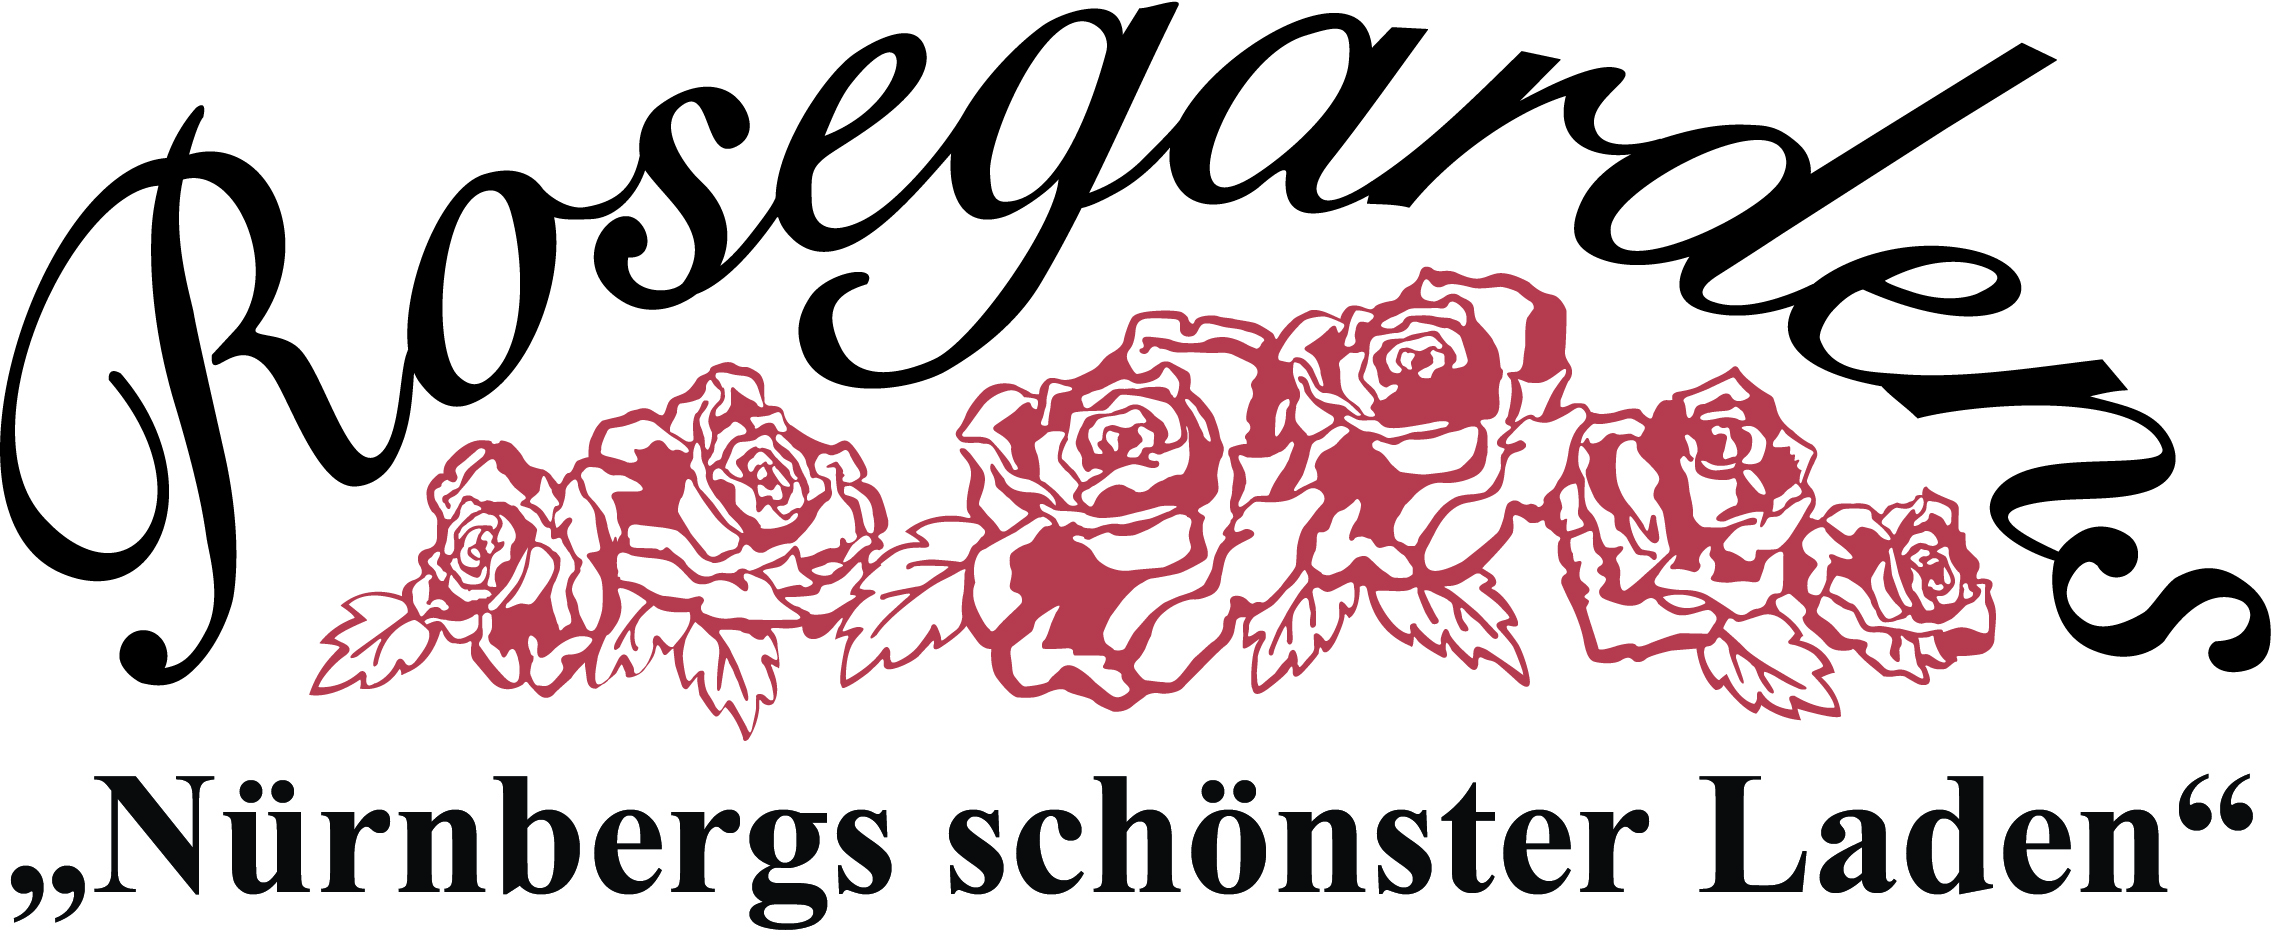 Logo Rosegardens - Nürbergs schönster Laden